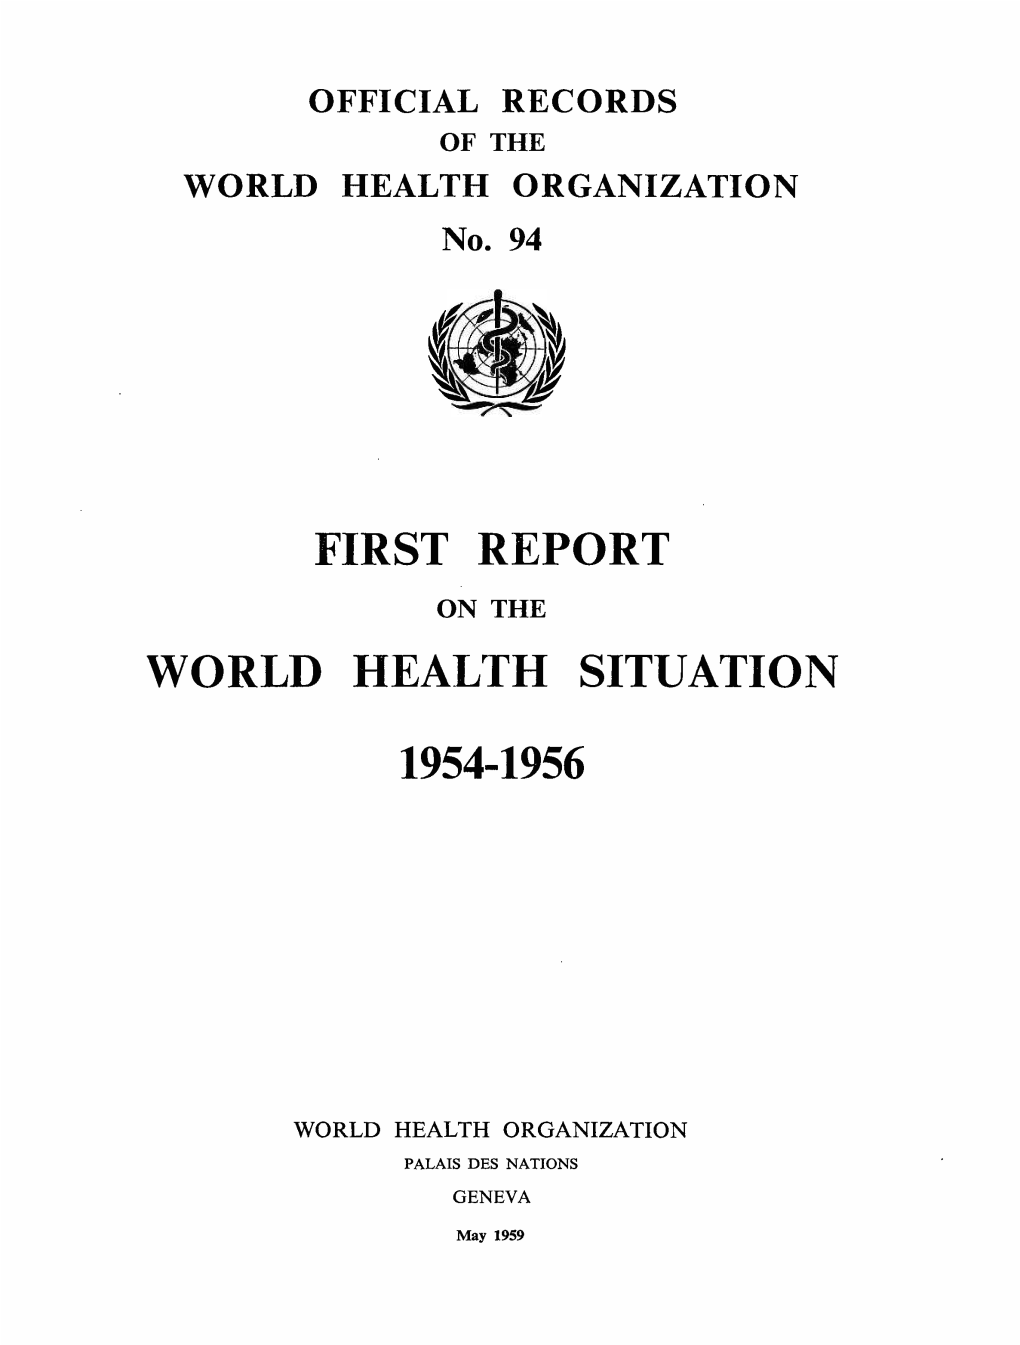 World Health Situation